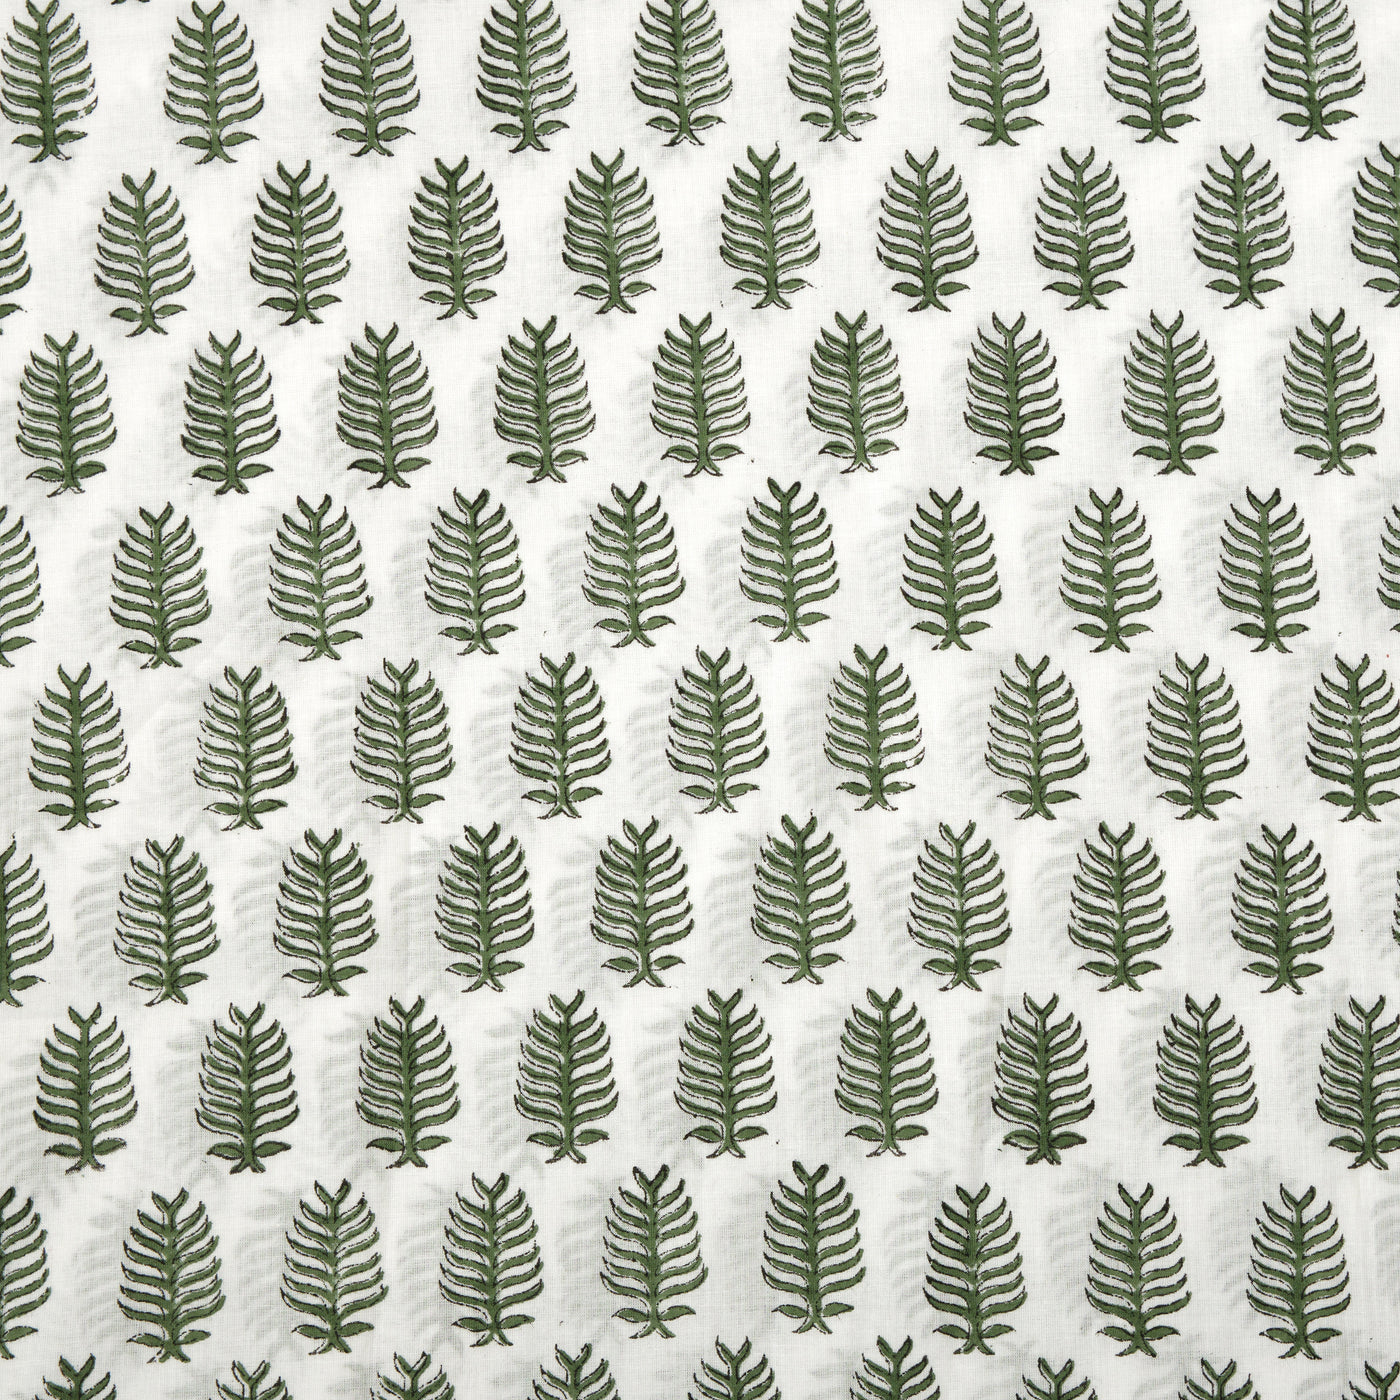 Fabricrush Juniper Green Indian Hand Block Leaf Print 100% Cotton Cloth, Eco-friendly, Fabric by the yard, Women's clothing Curtains Pillows Cushions